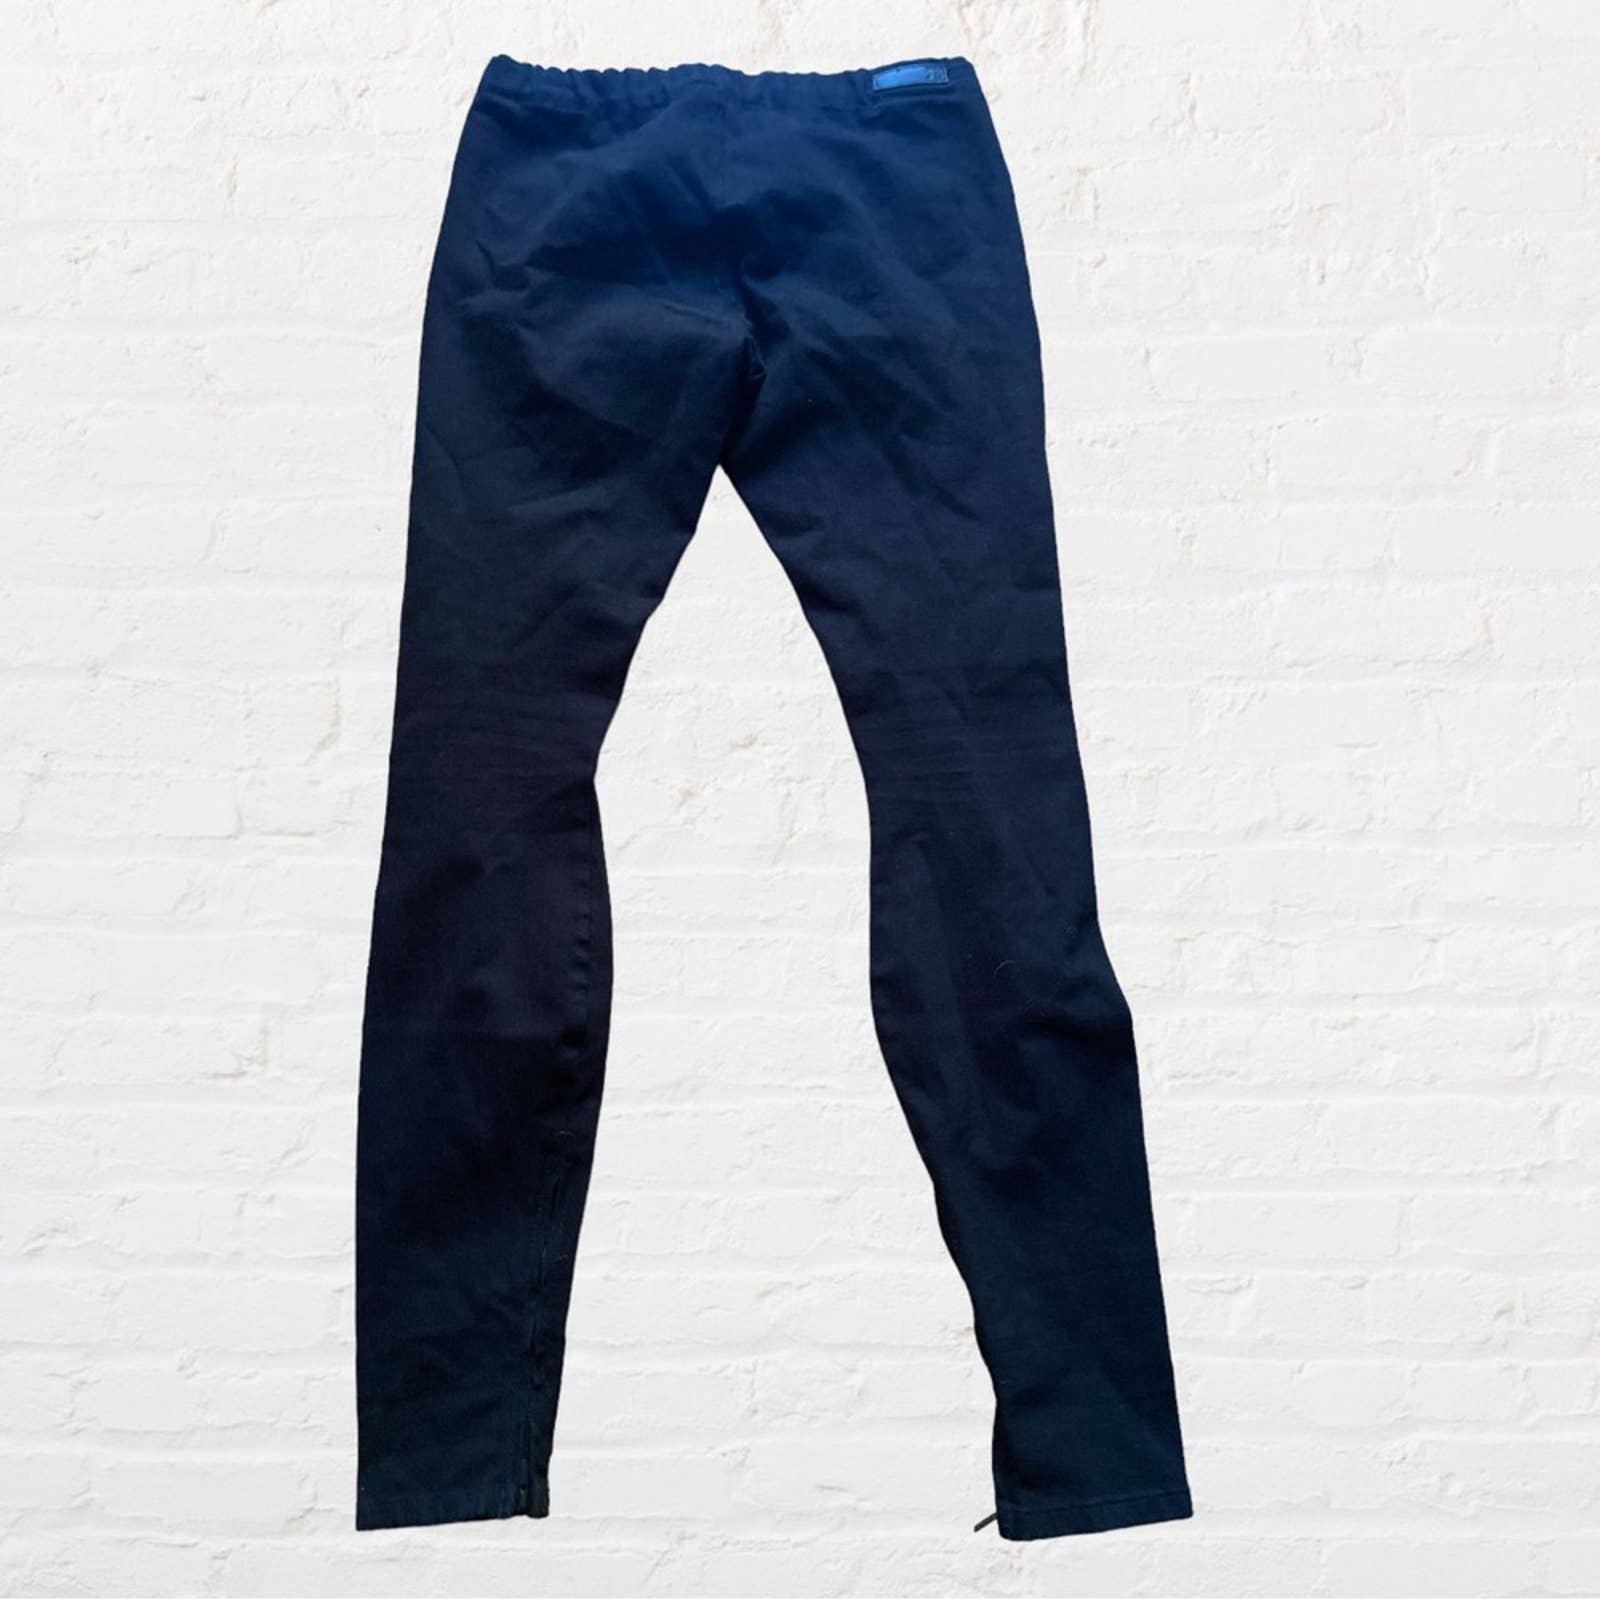 Latest  Joe’s Jeans pull up distressed jegging style jeans LW4YrW9dA High Quaity